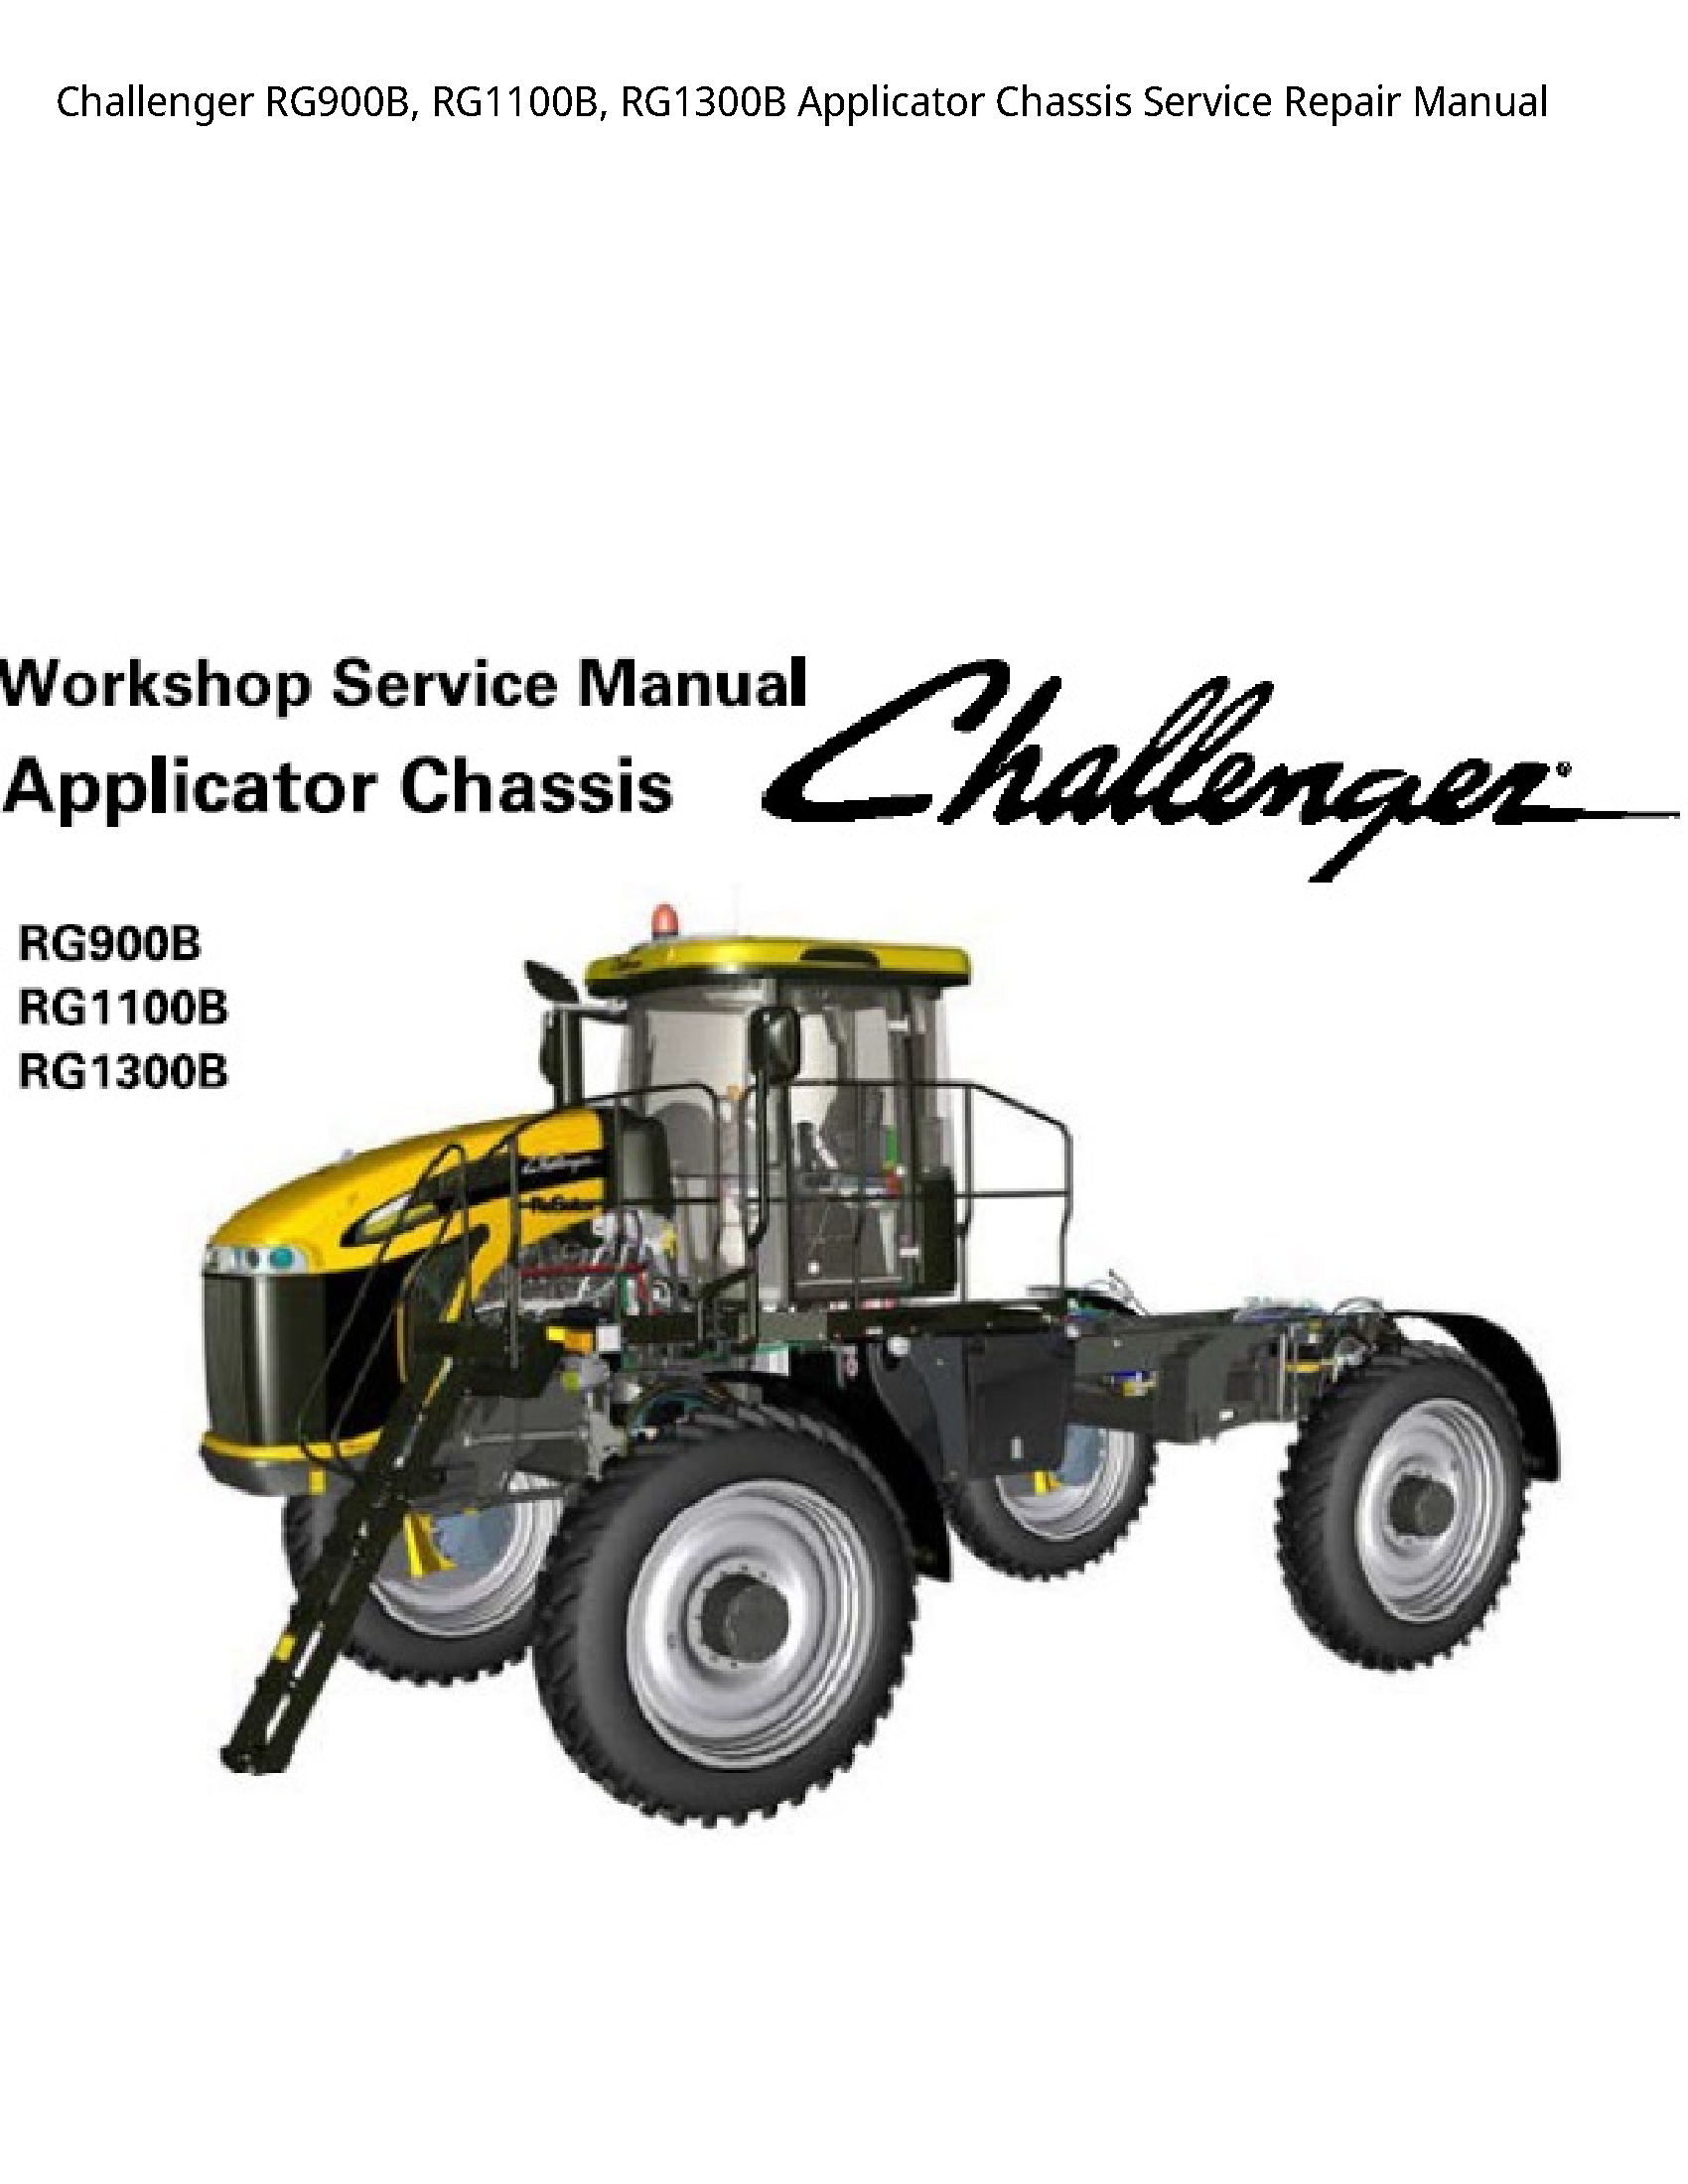 Challenger RG900B Applicator Chassis manual